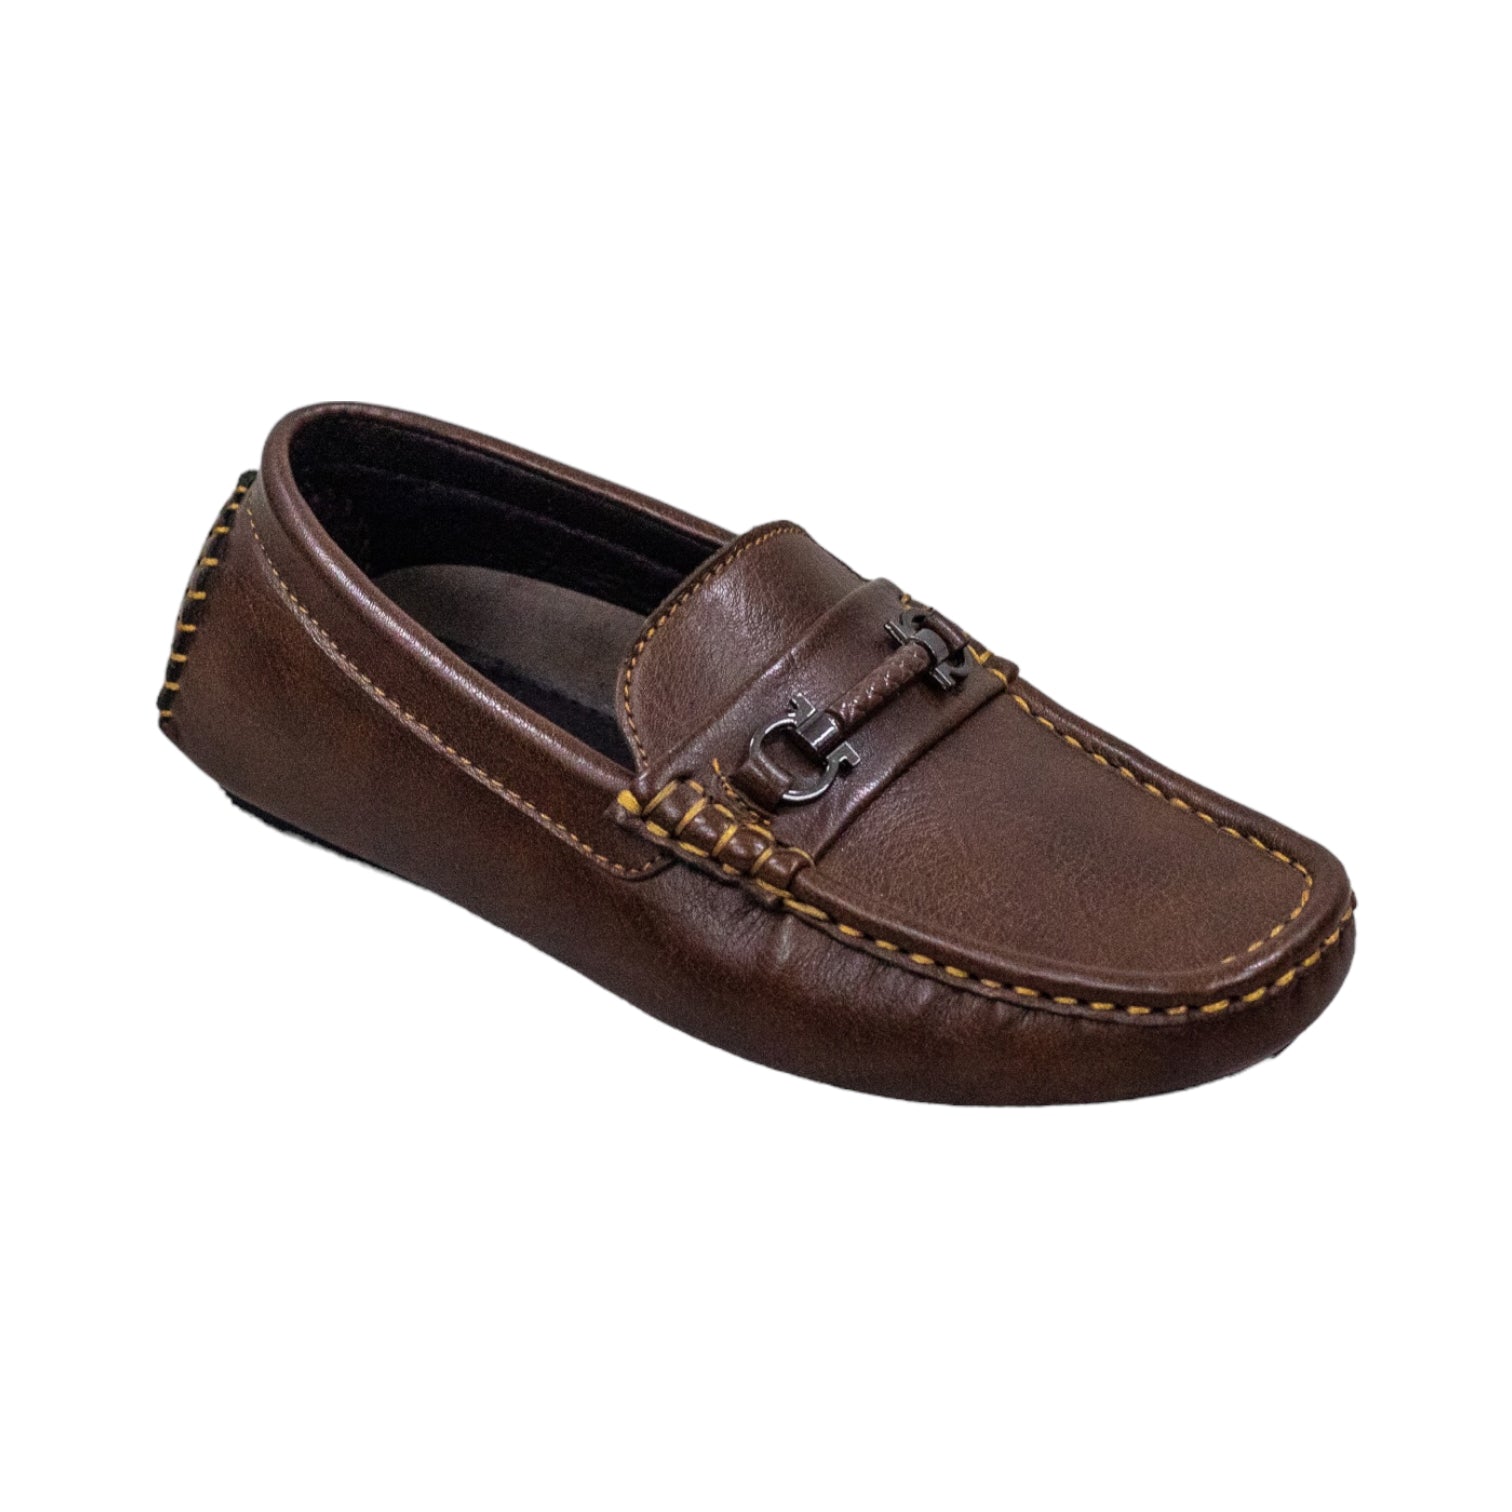 Gucci infant boys moccasins shoes brown